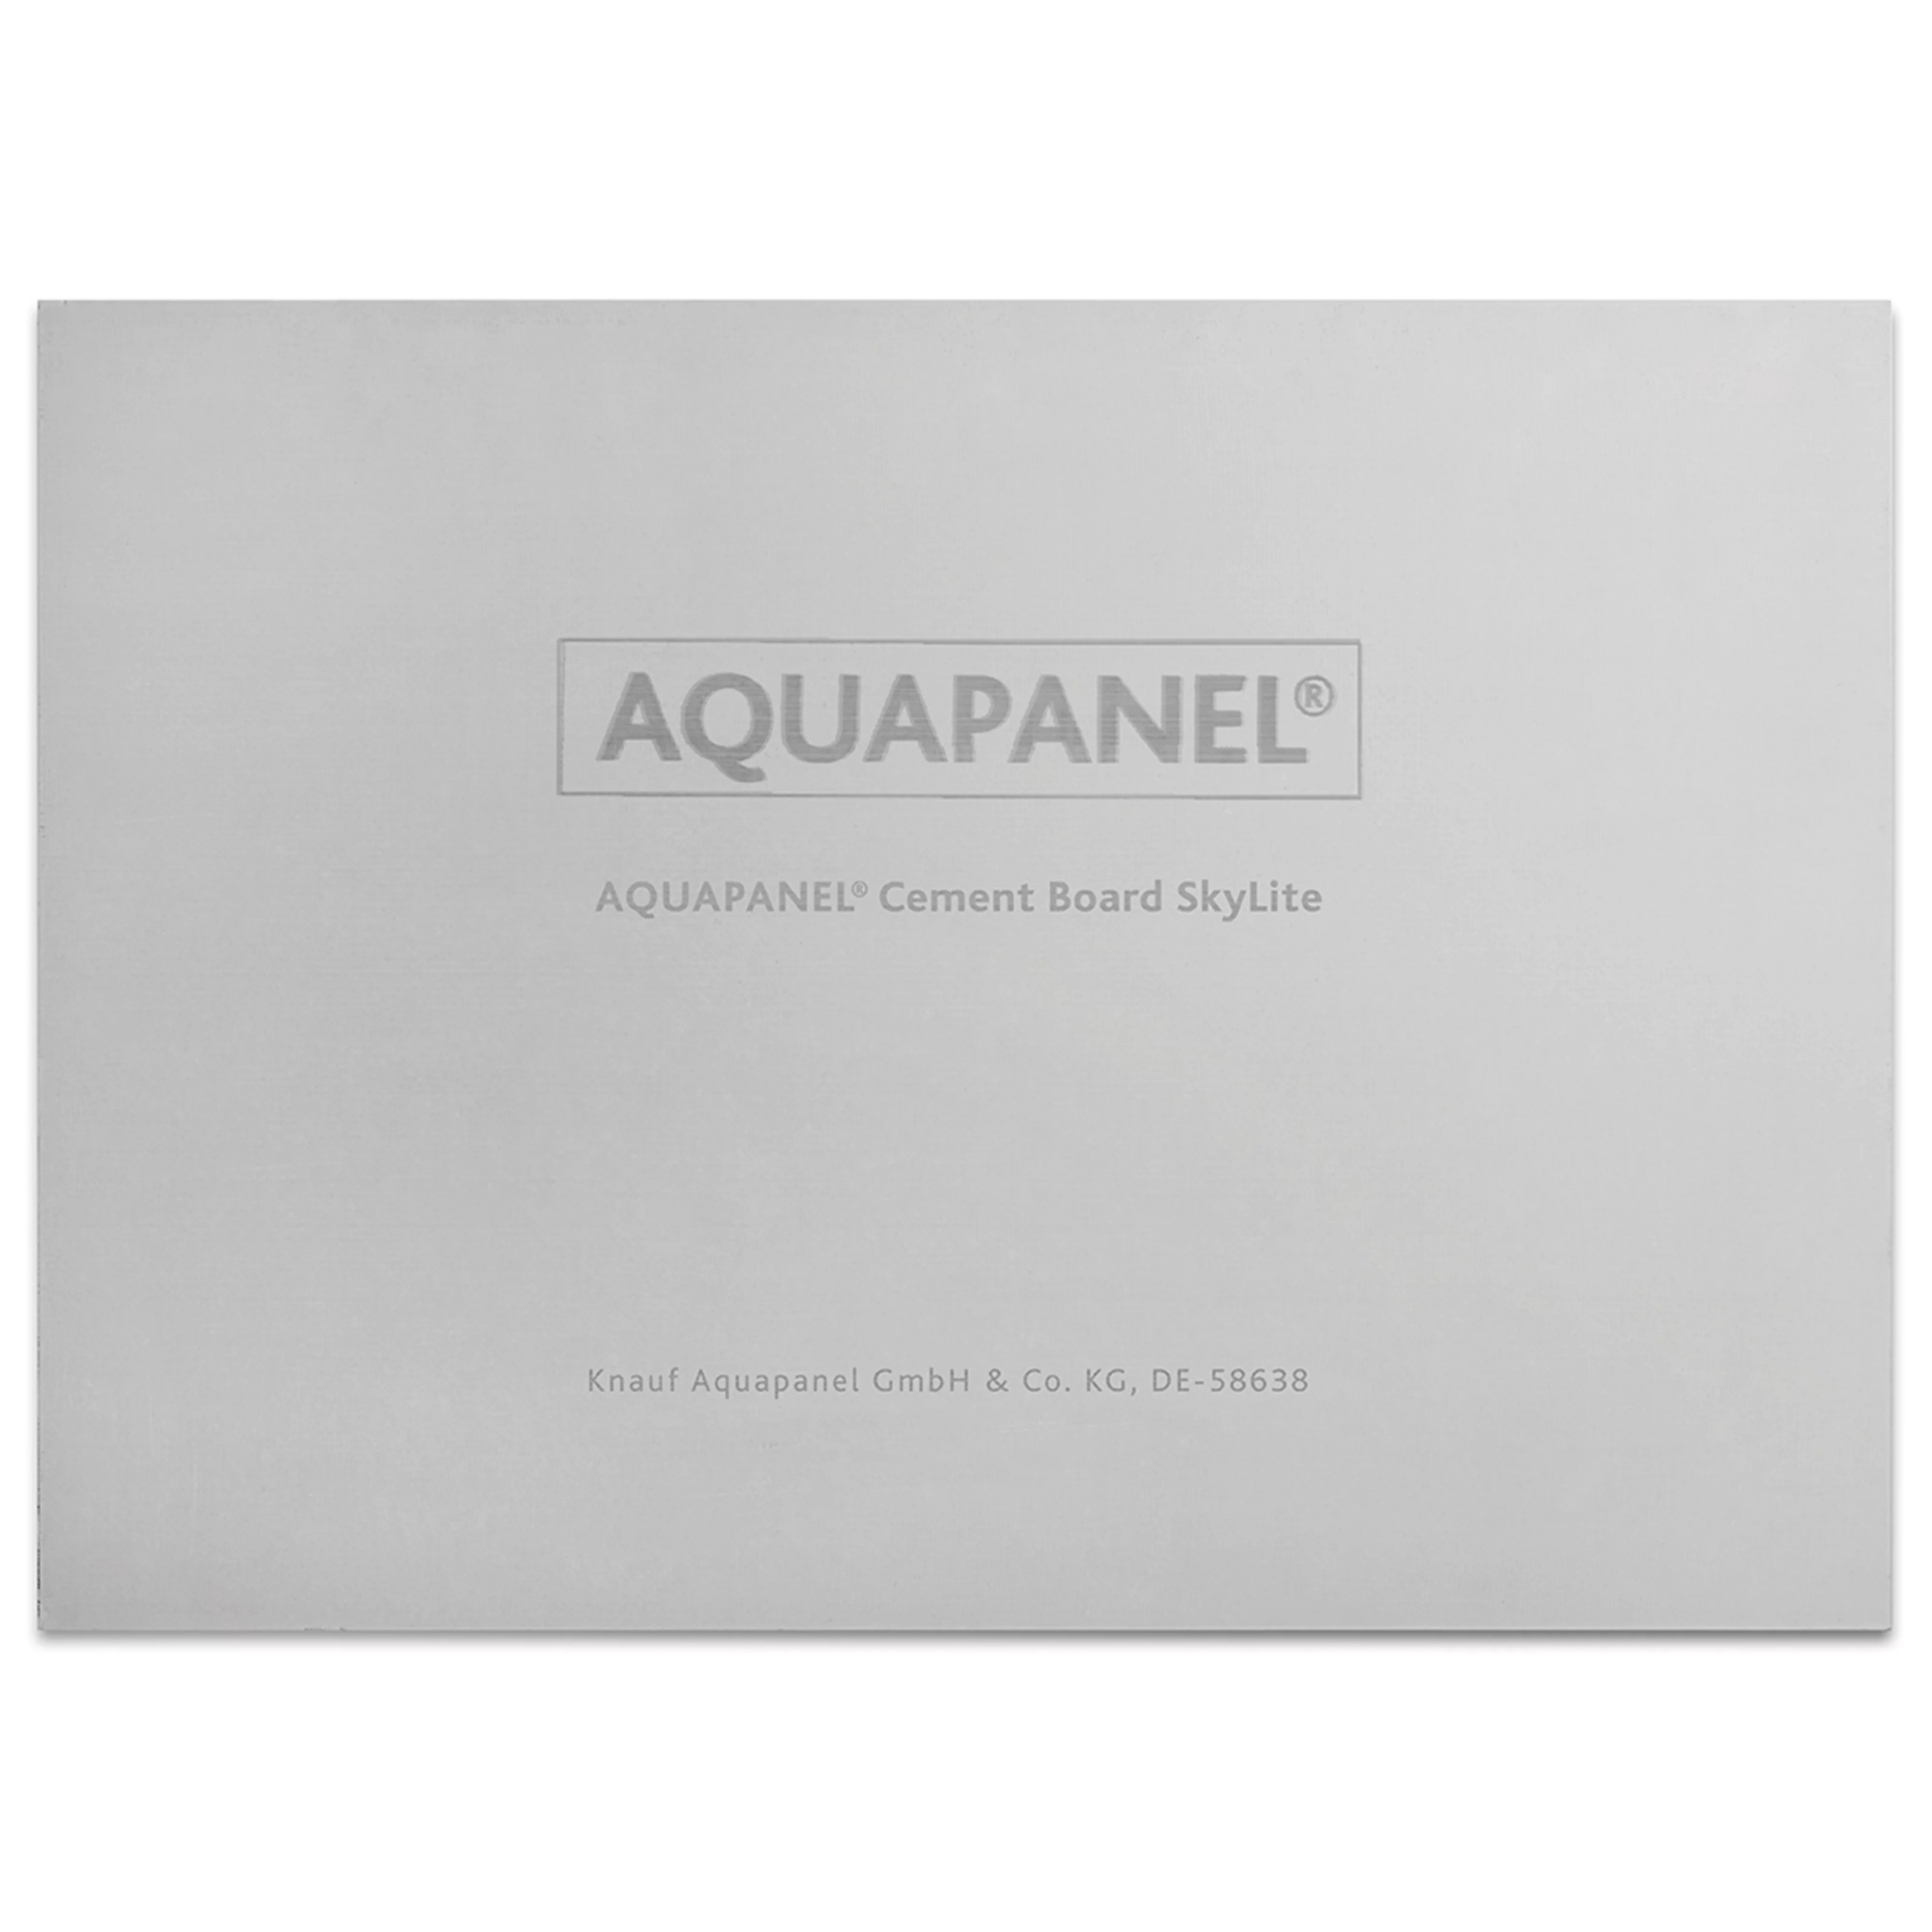 Aquapanel cement board skylite